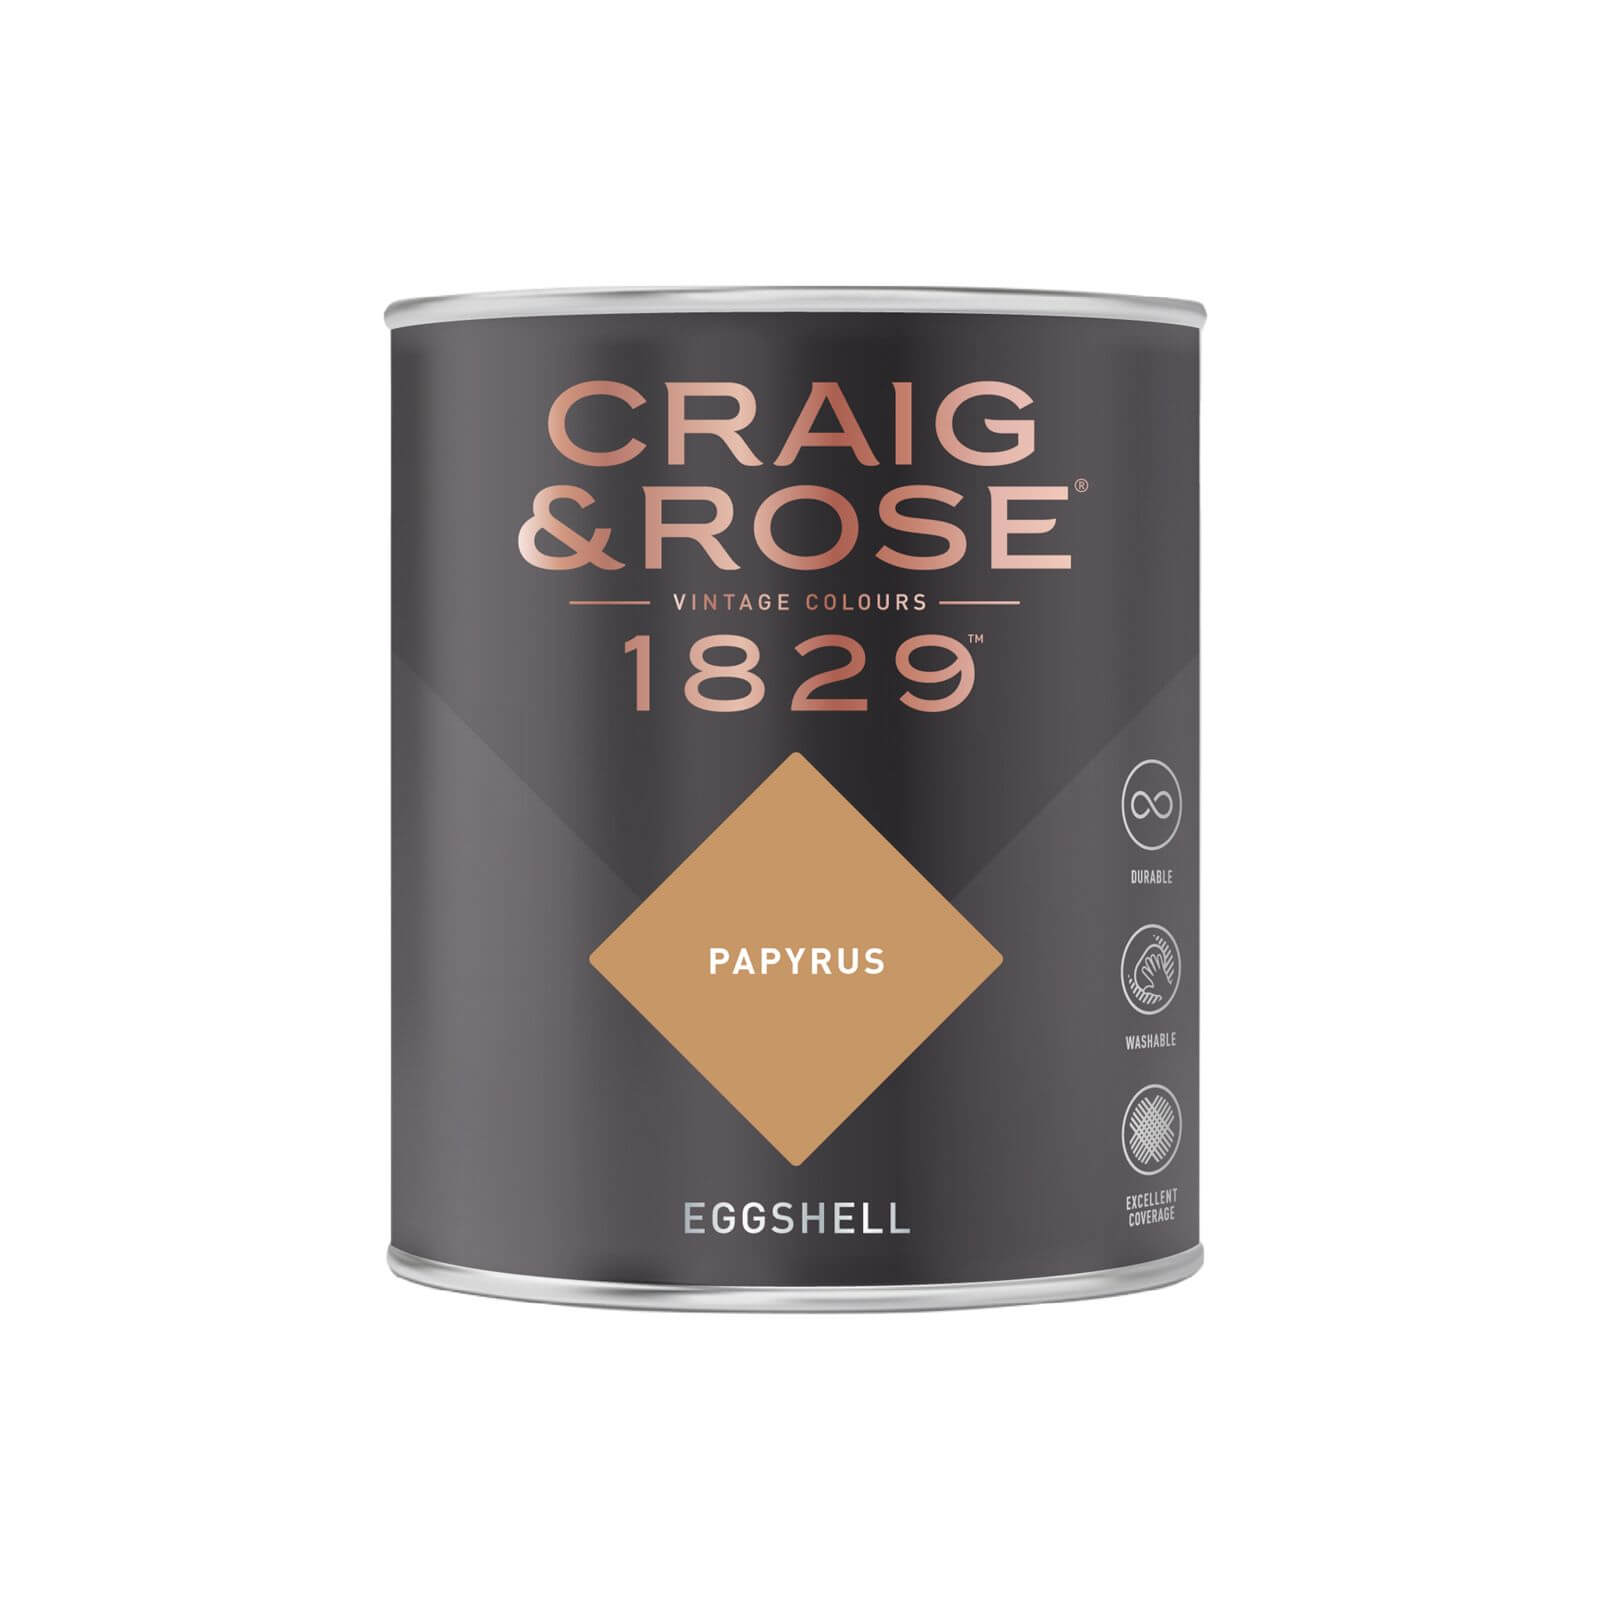 Craig & Rose 1829 Eggshell Paint Papyrus - 750ml